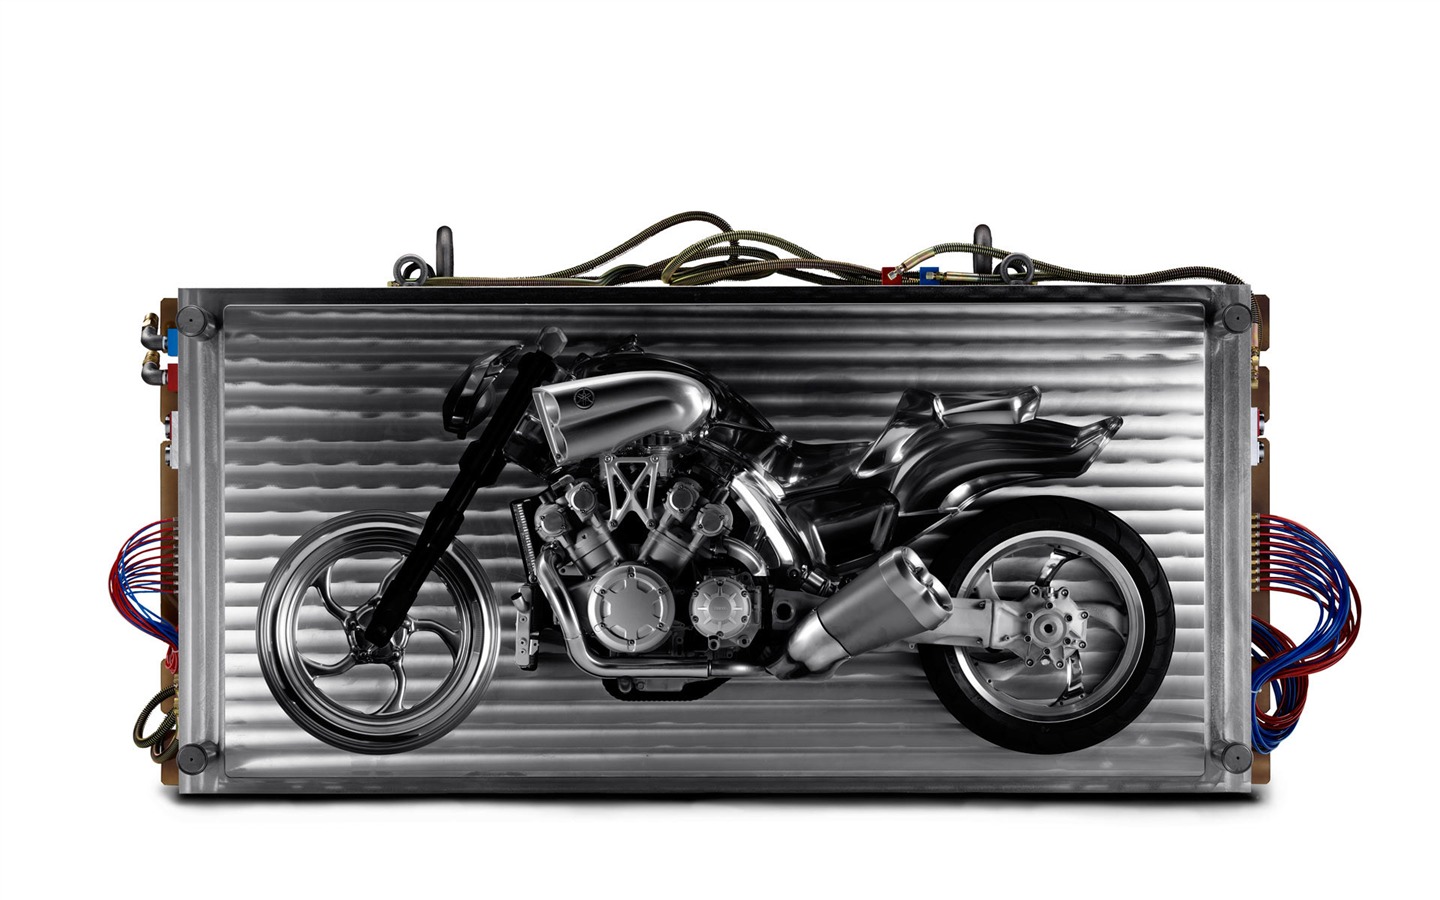 概念摩托车 壁纸(三)17 - 1440x900